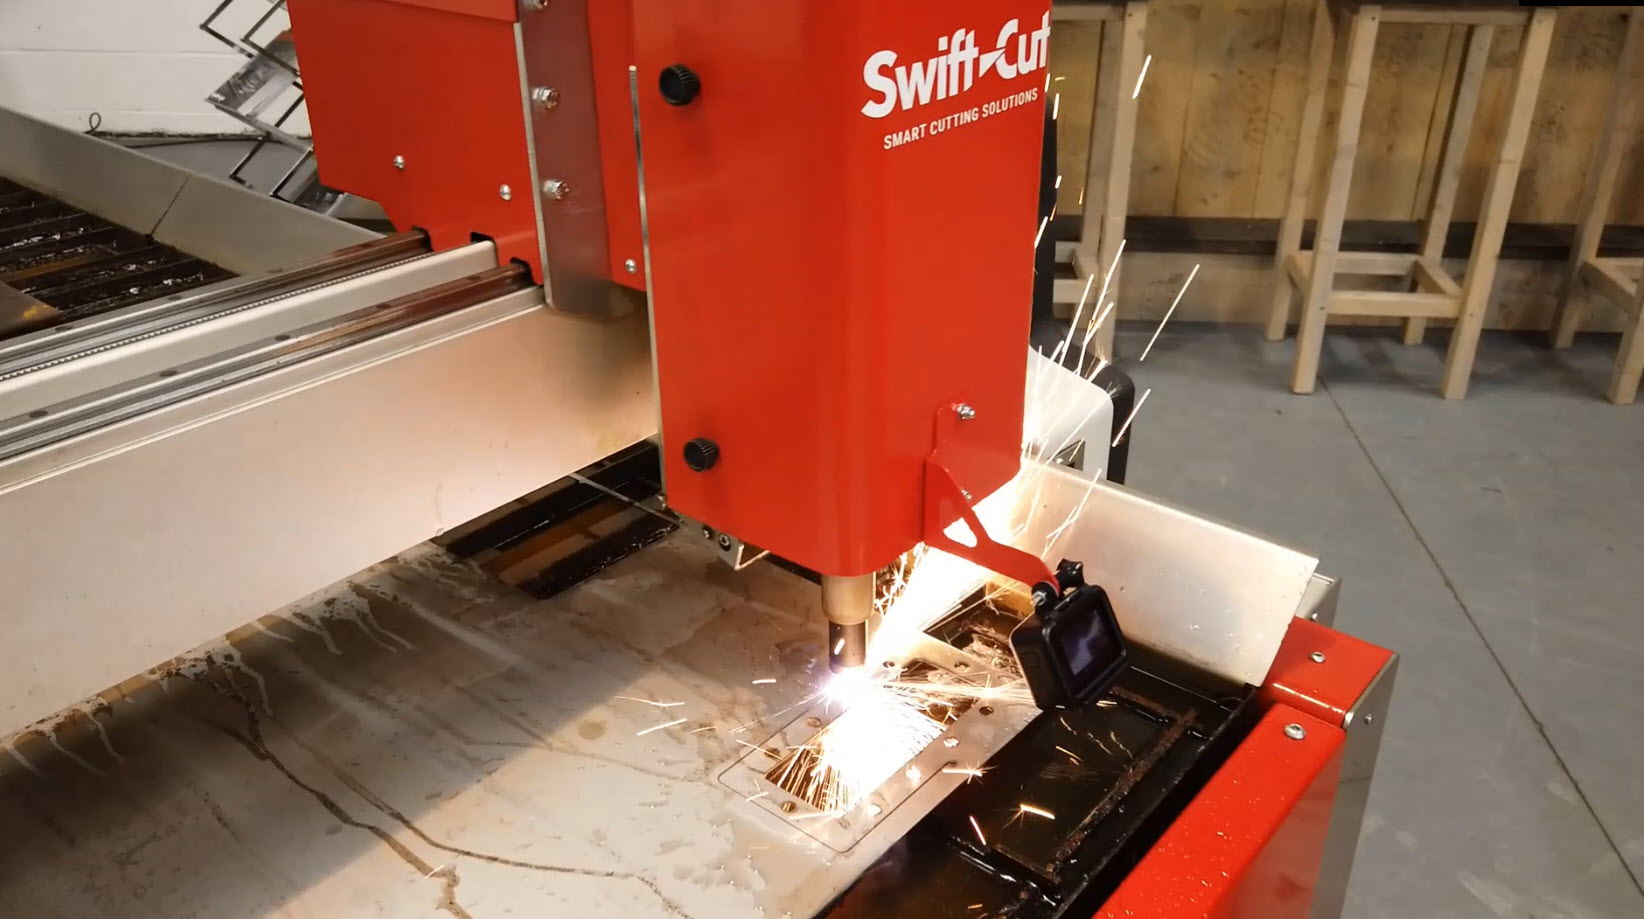 Swift-Cut Pro 1,5 mm CNC-Schneidetisch Schneidemetall mit Funkenbildung